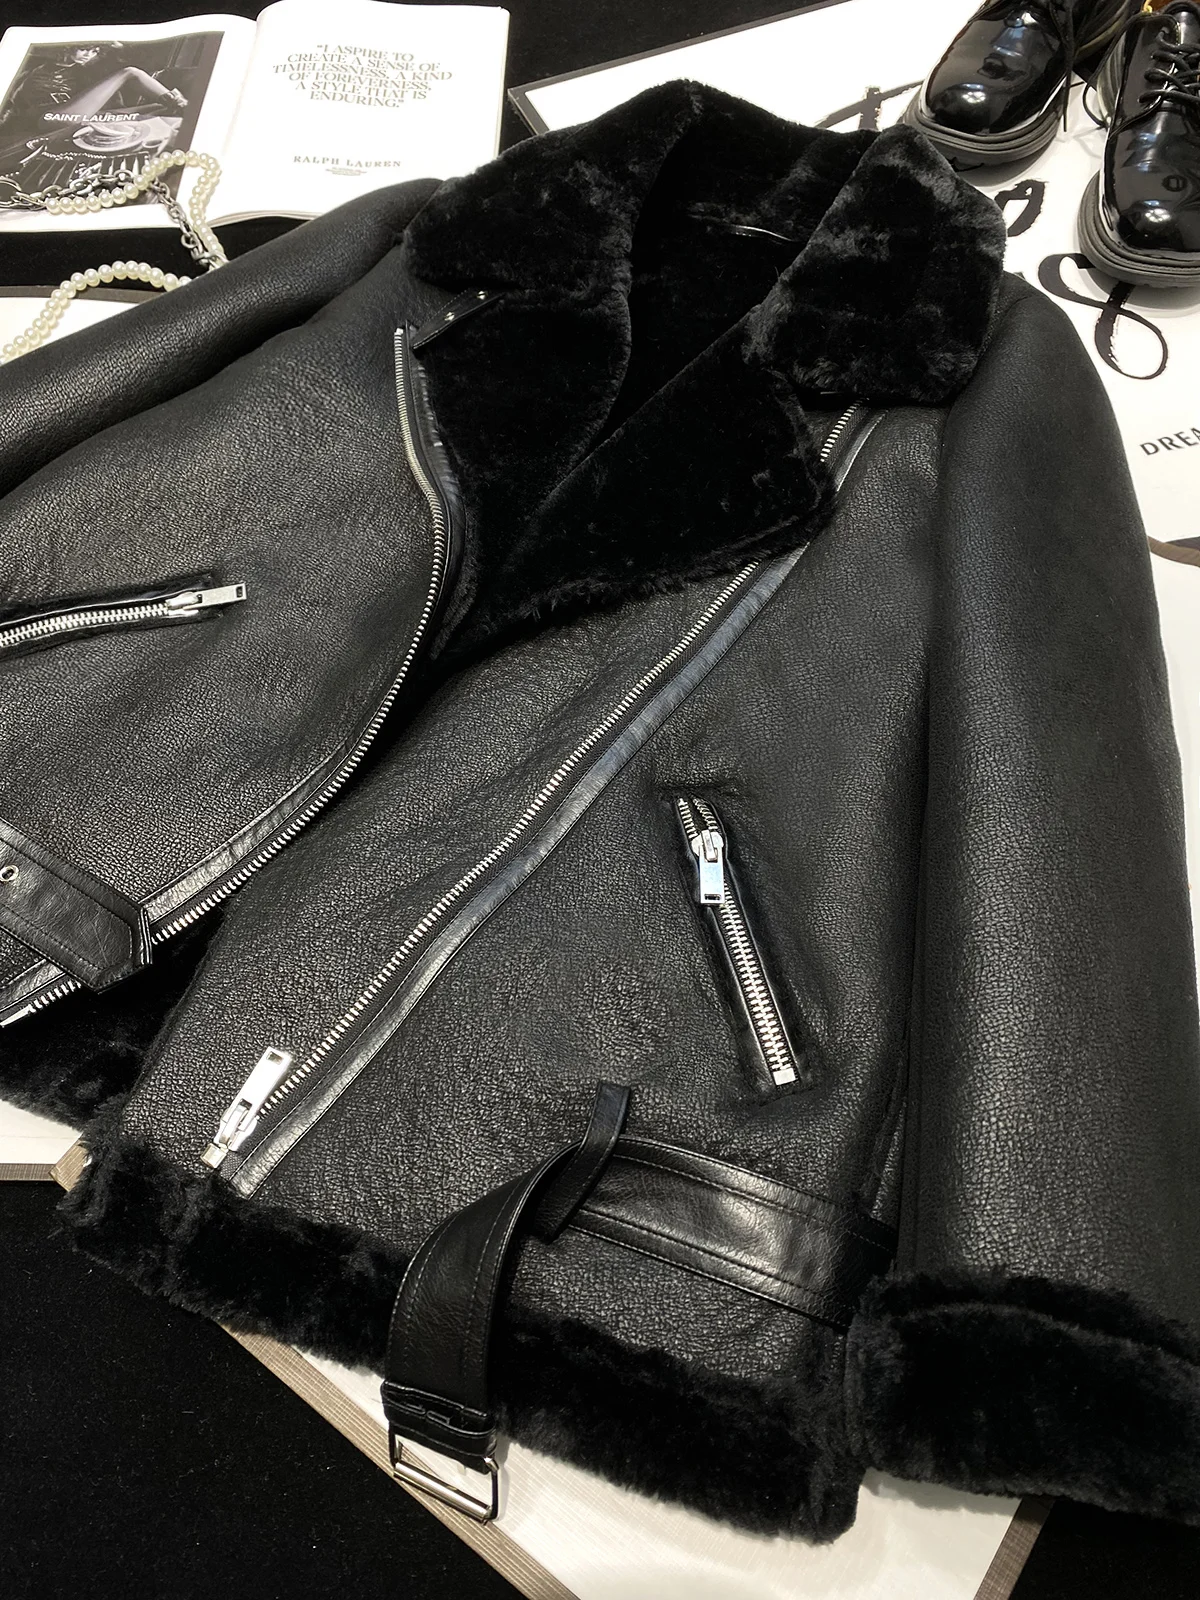 YOZOU Winter Luxury Black Faux Fur Leather Coat Zipper Zip Up Warm Thick Plush Biker Jackets Parkas Women Female Outwear Chic